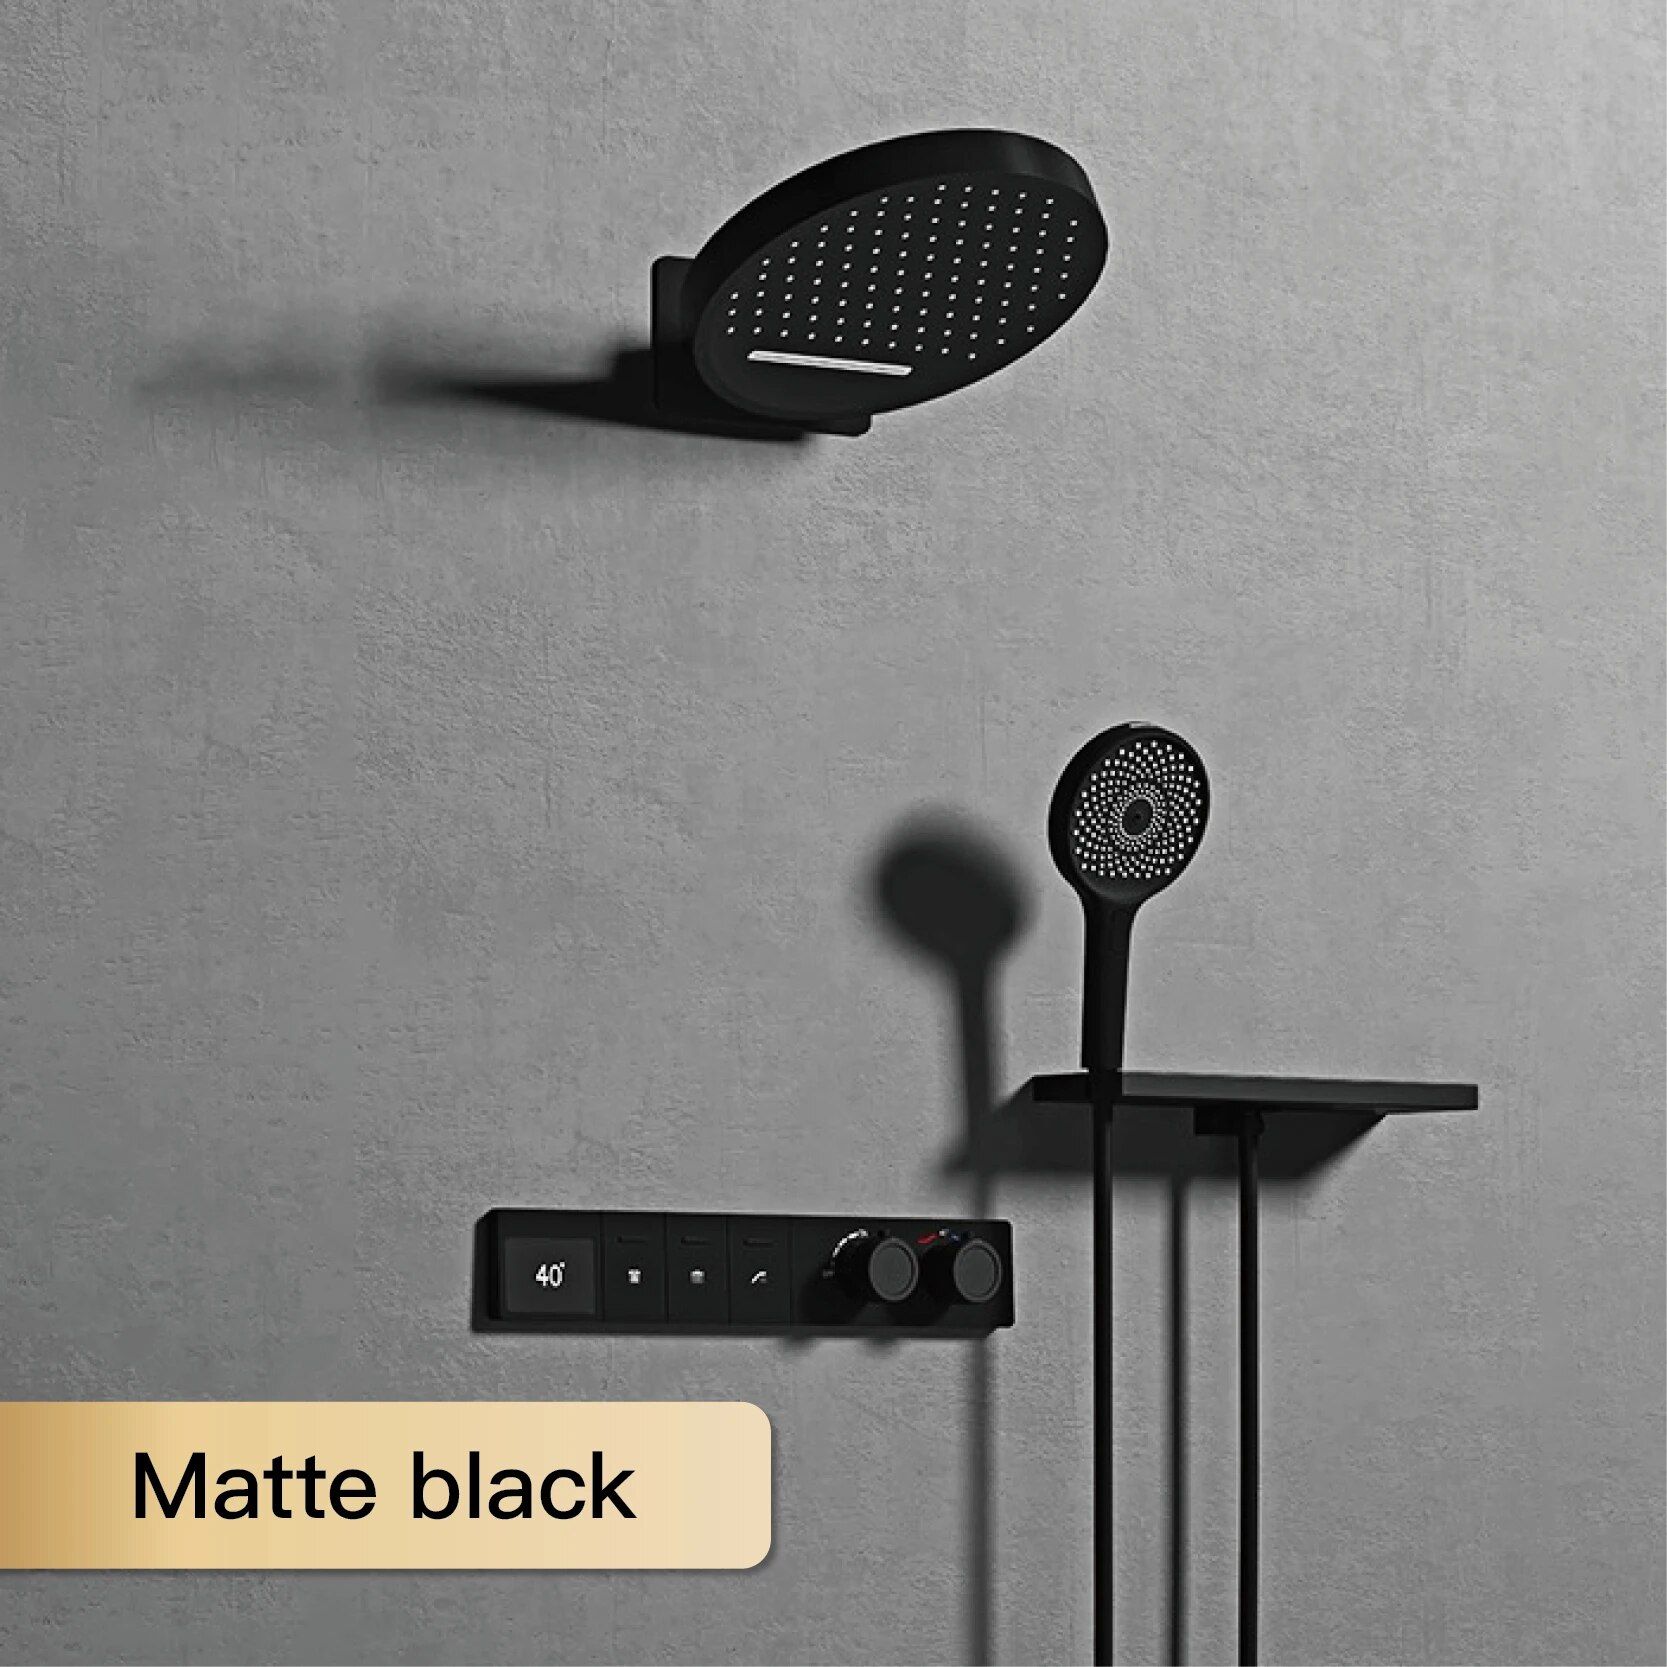 Matte Black (with a shelf)